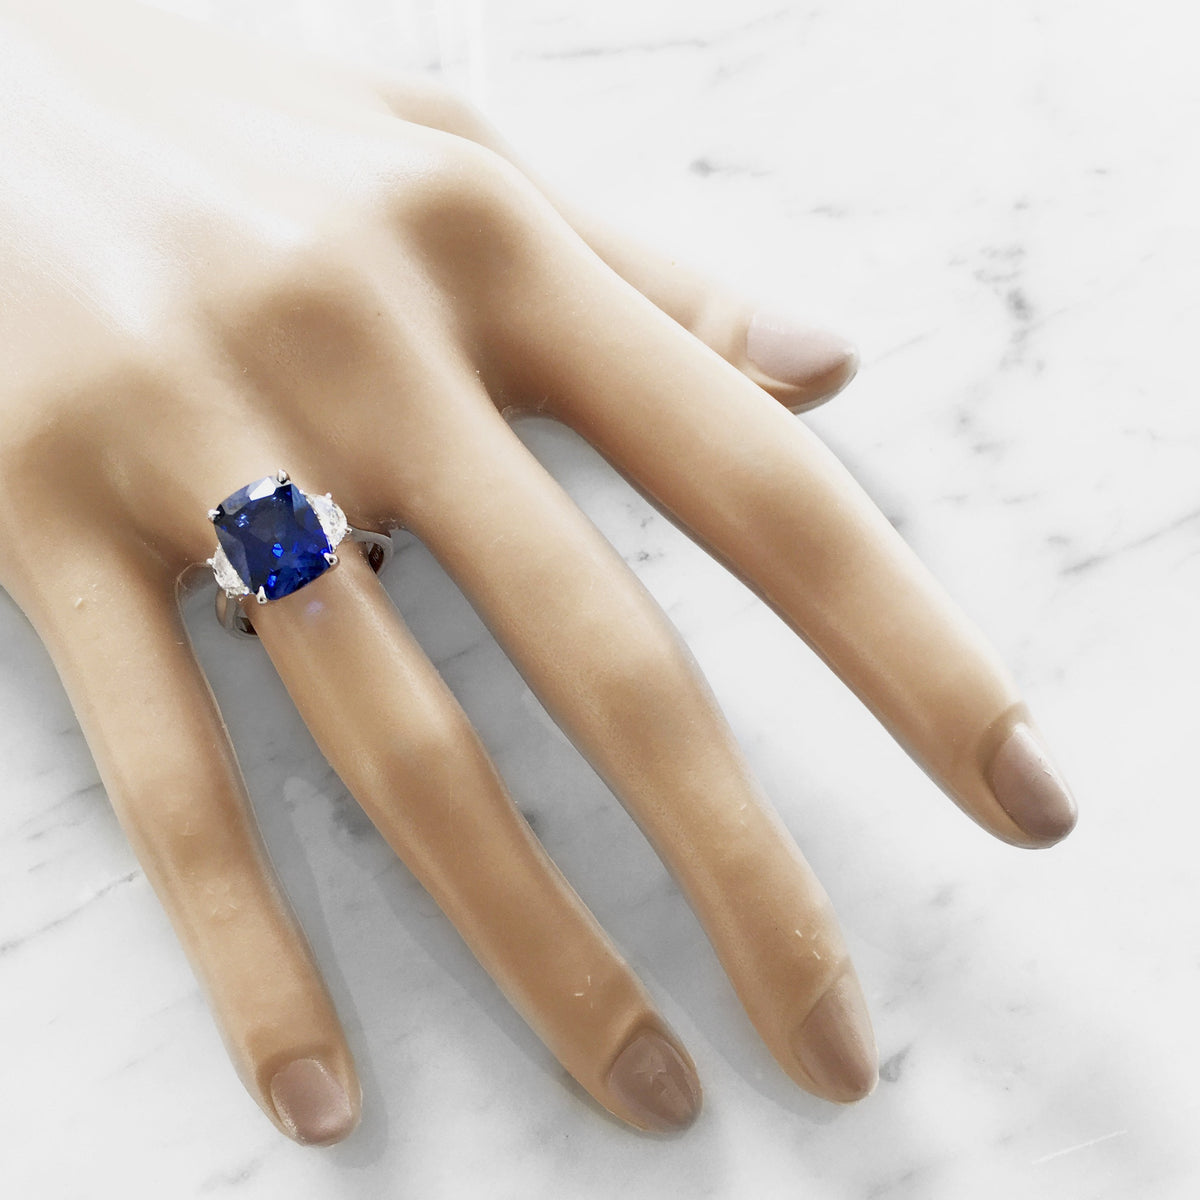 Alexandra 4 Carat Blue Sapphire Ring with Diamonds – Unique